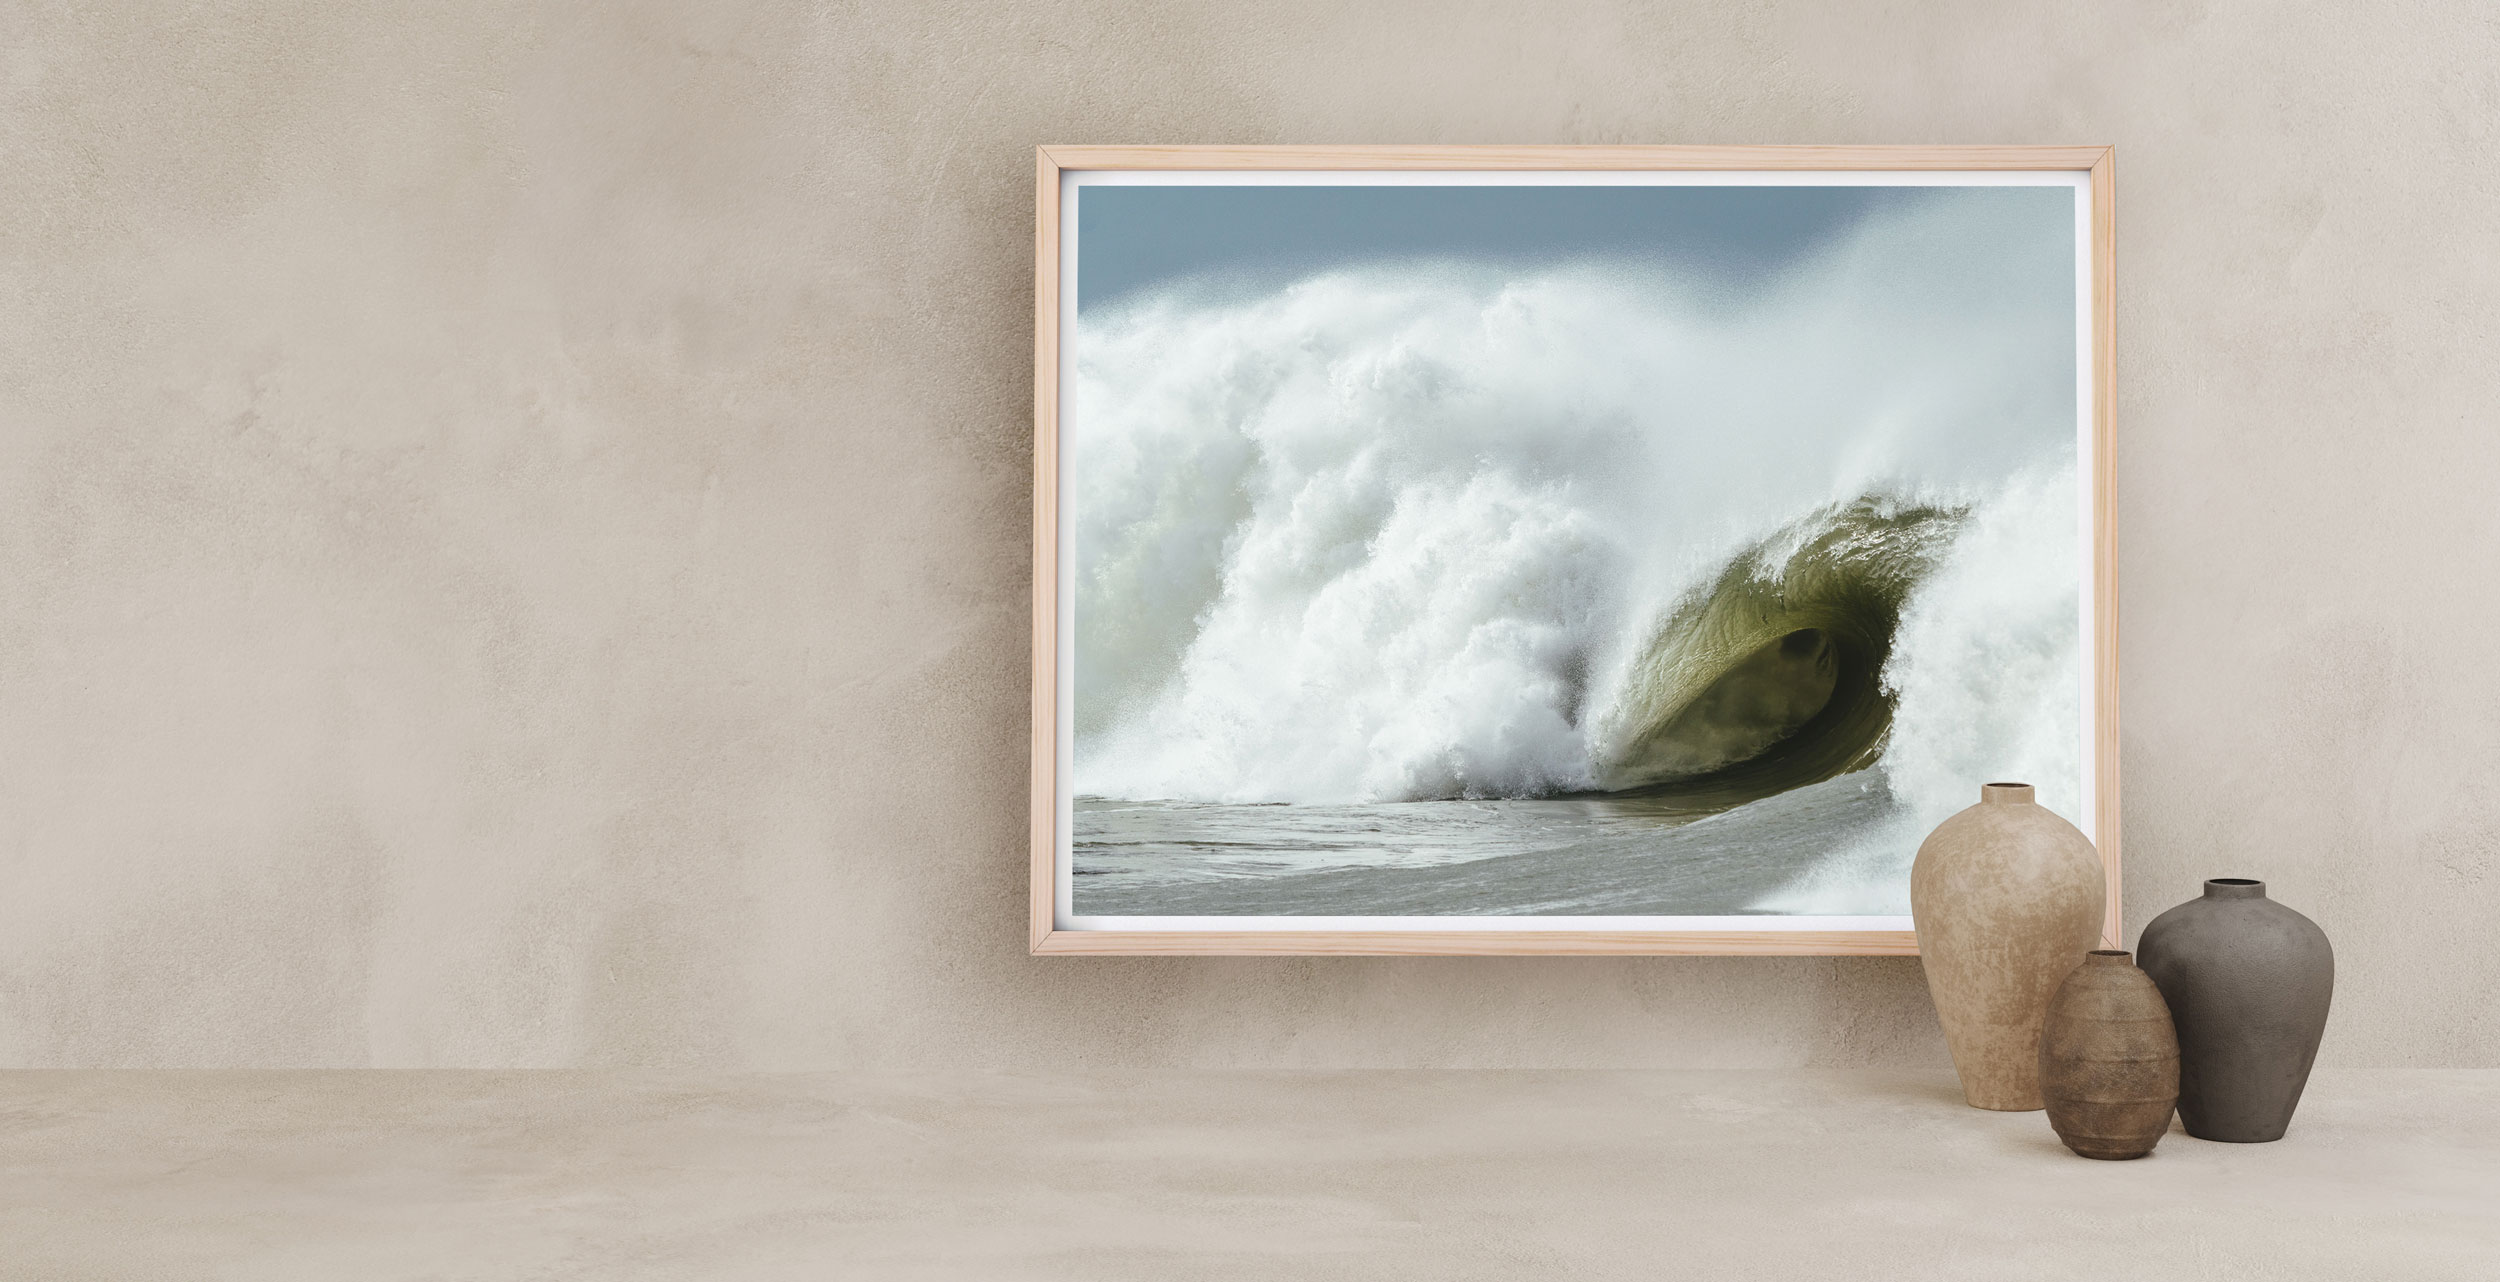 Fine art print of Burly South wave from Queenstown Photographer Stefan Haworth, NZ. Image captured in wild ocean New Zealand